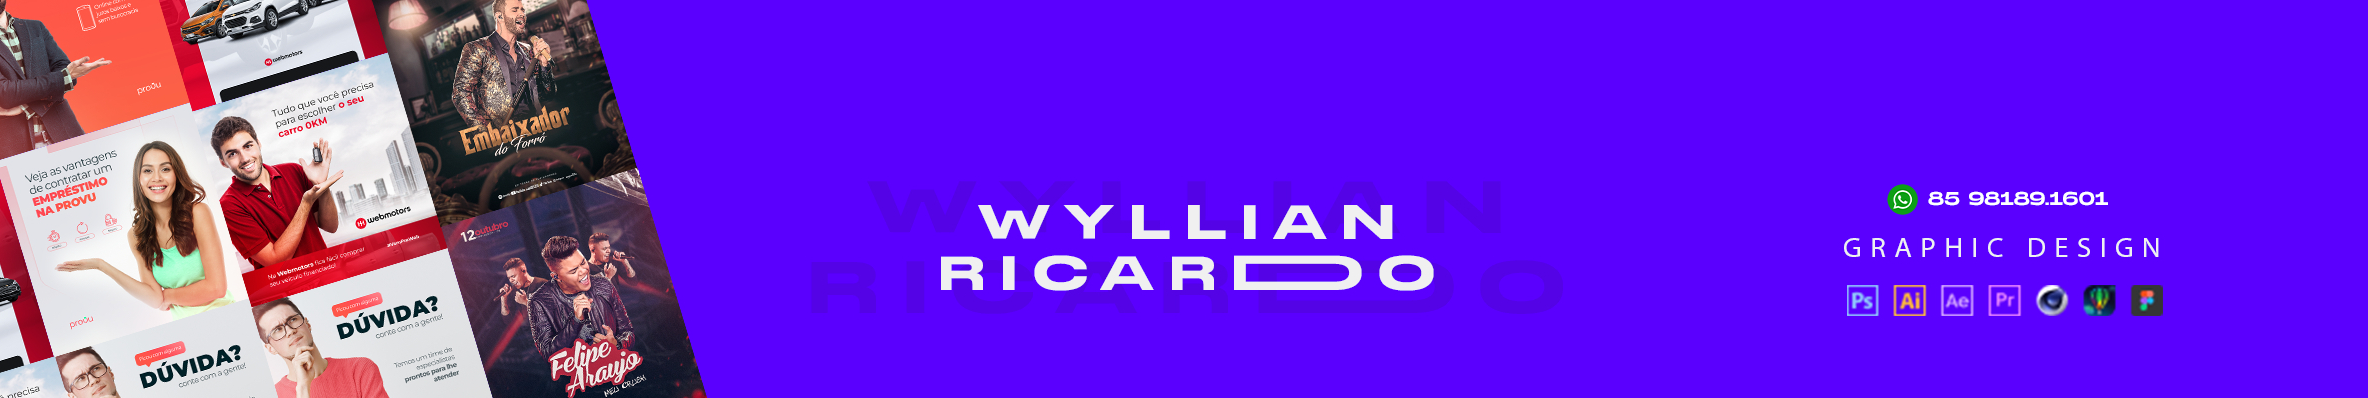 Wyllian Ricardo's profile banner